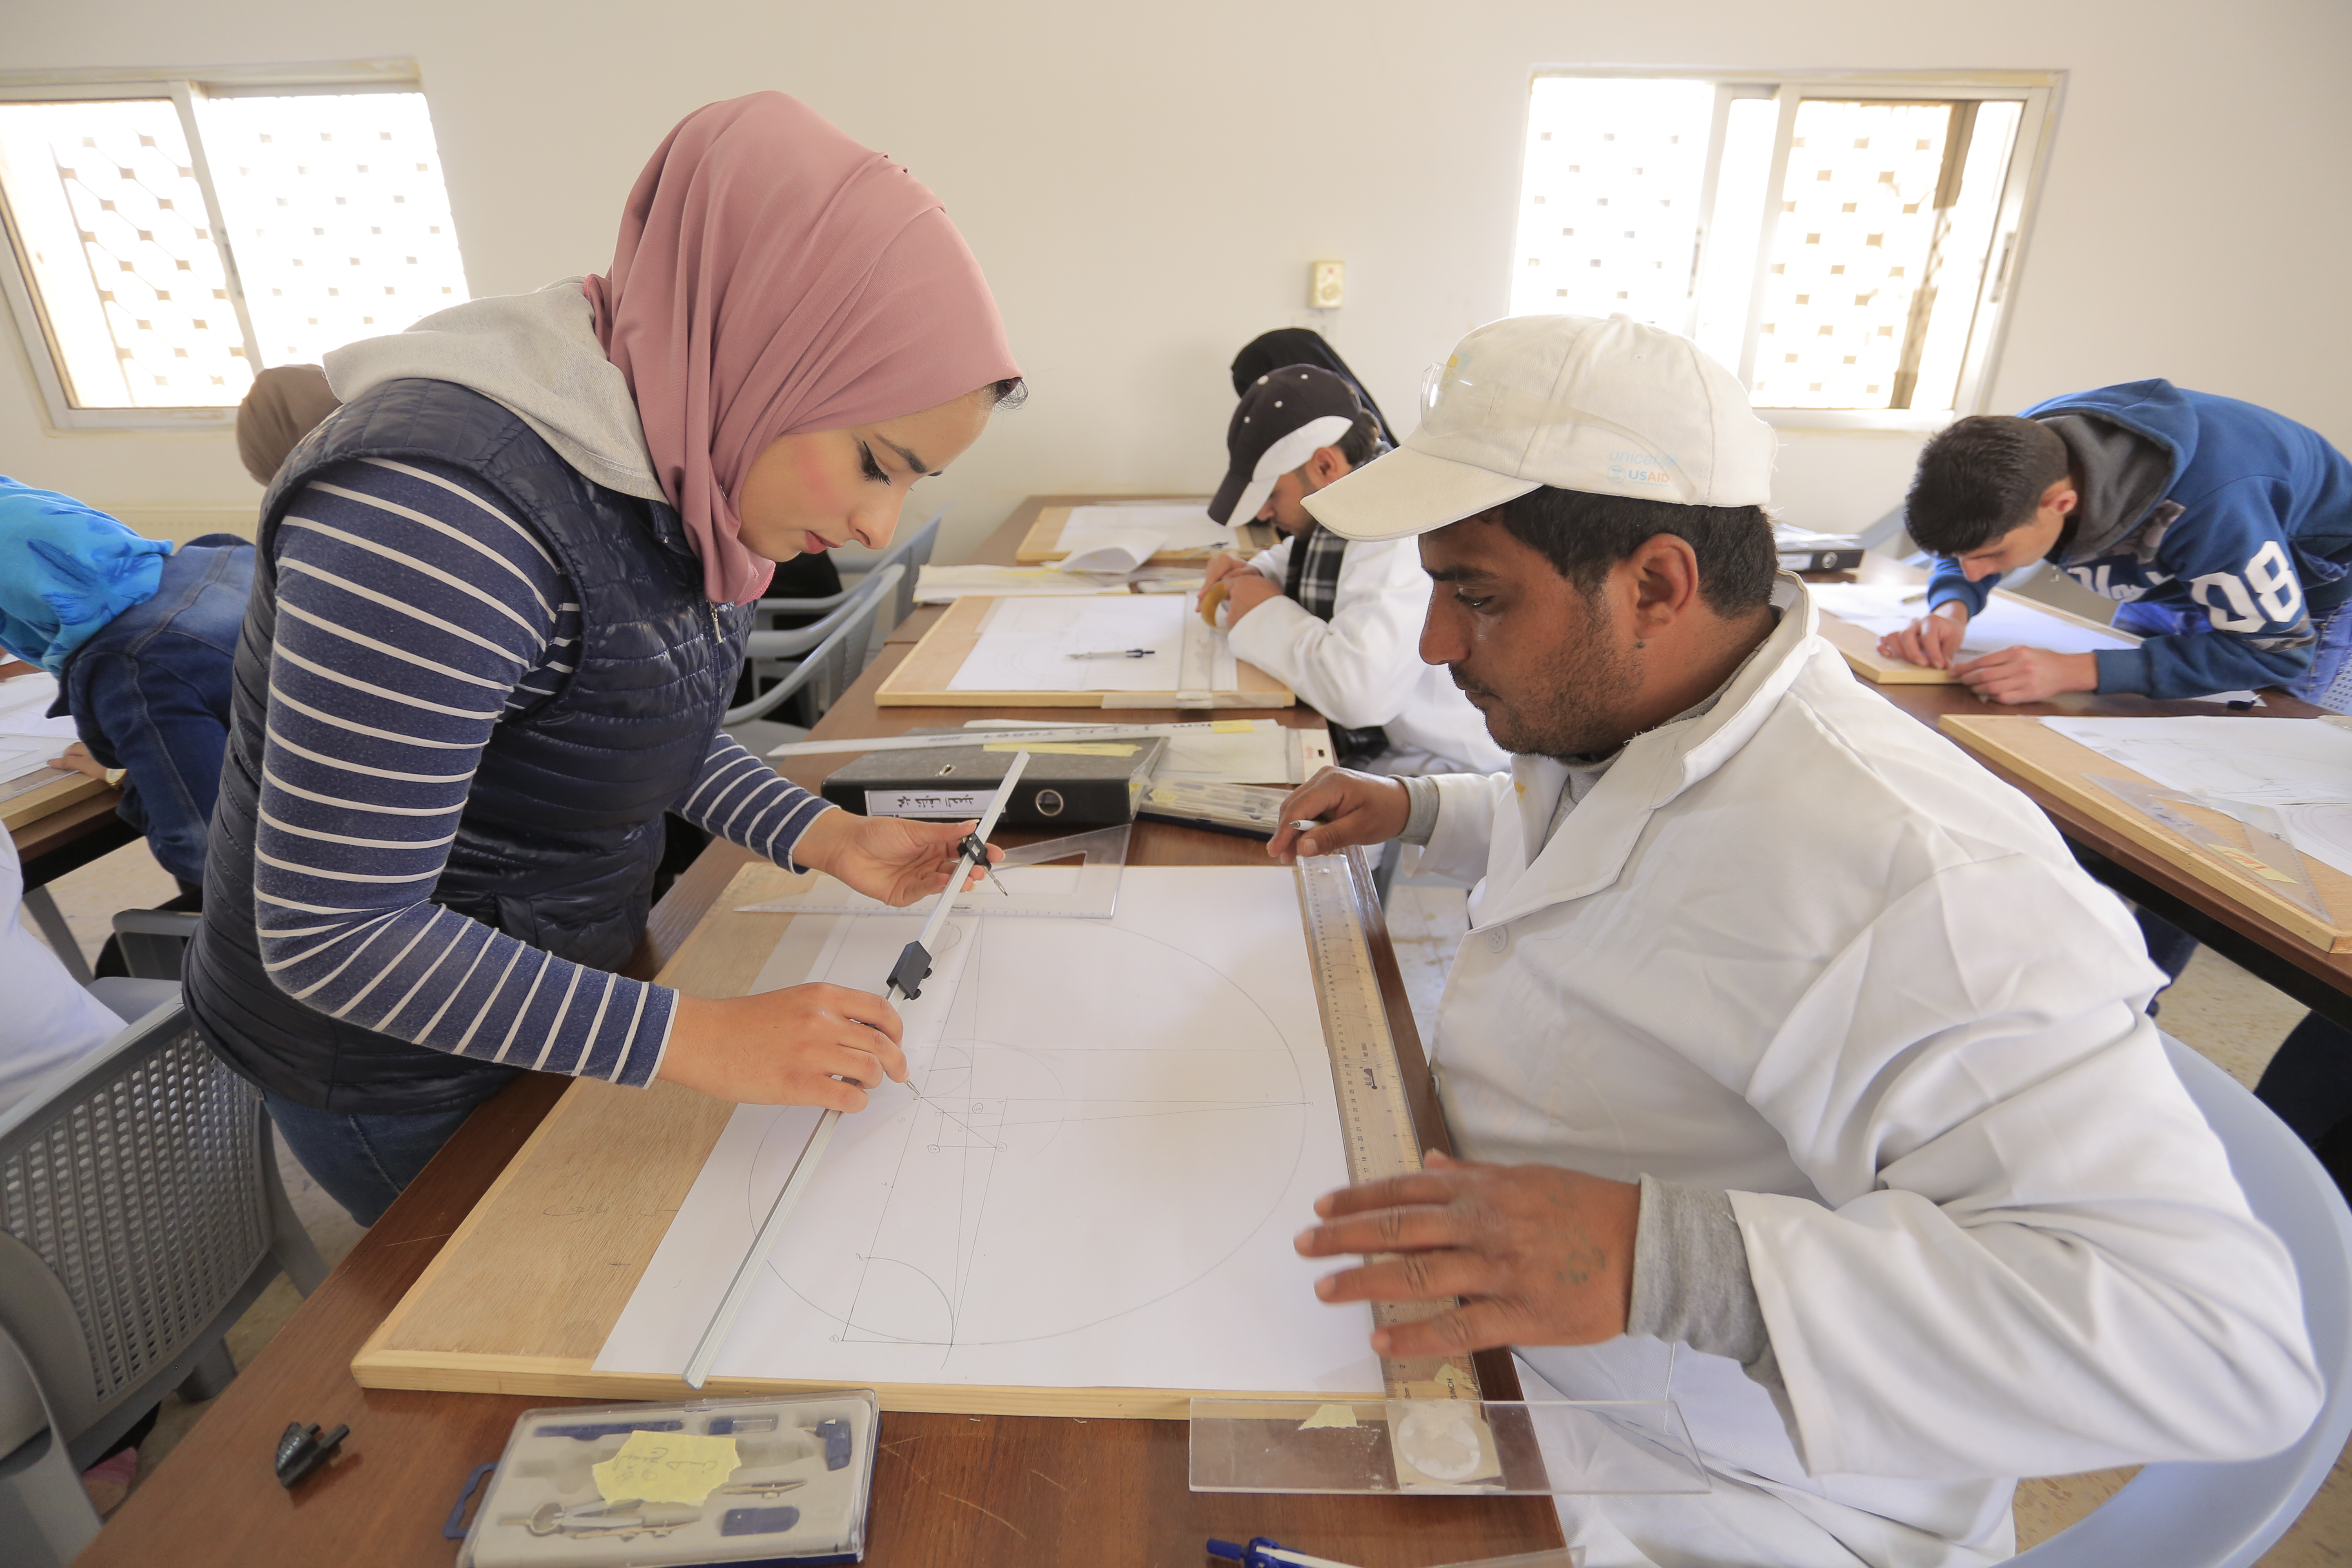 Nour Shdaifat, a leader of WMF’s stonemasonry training program, instructs Hasan, a Syrian trainee, on technical drawings